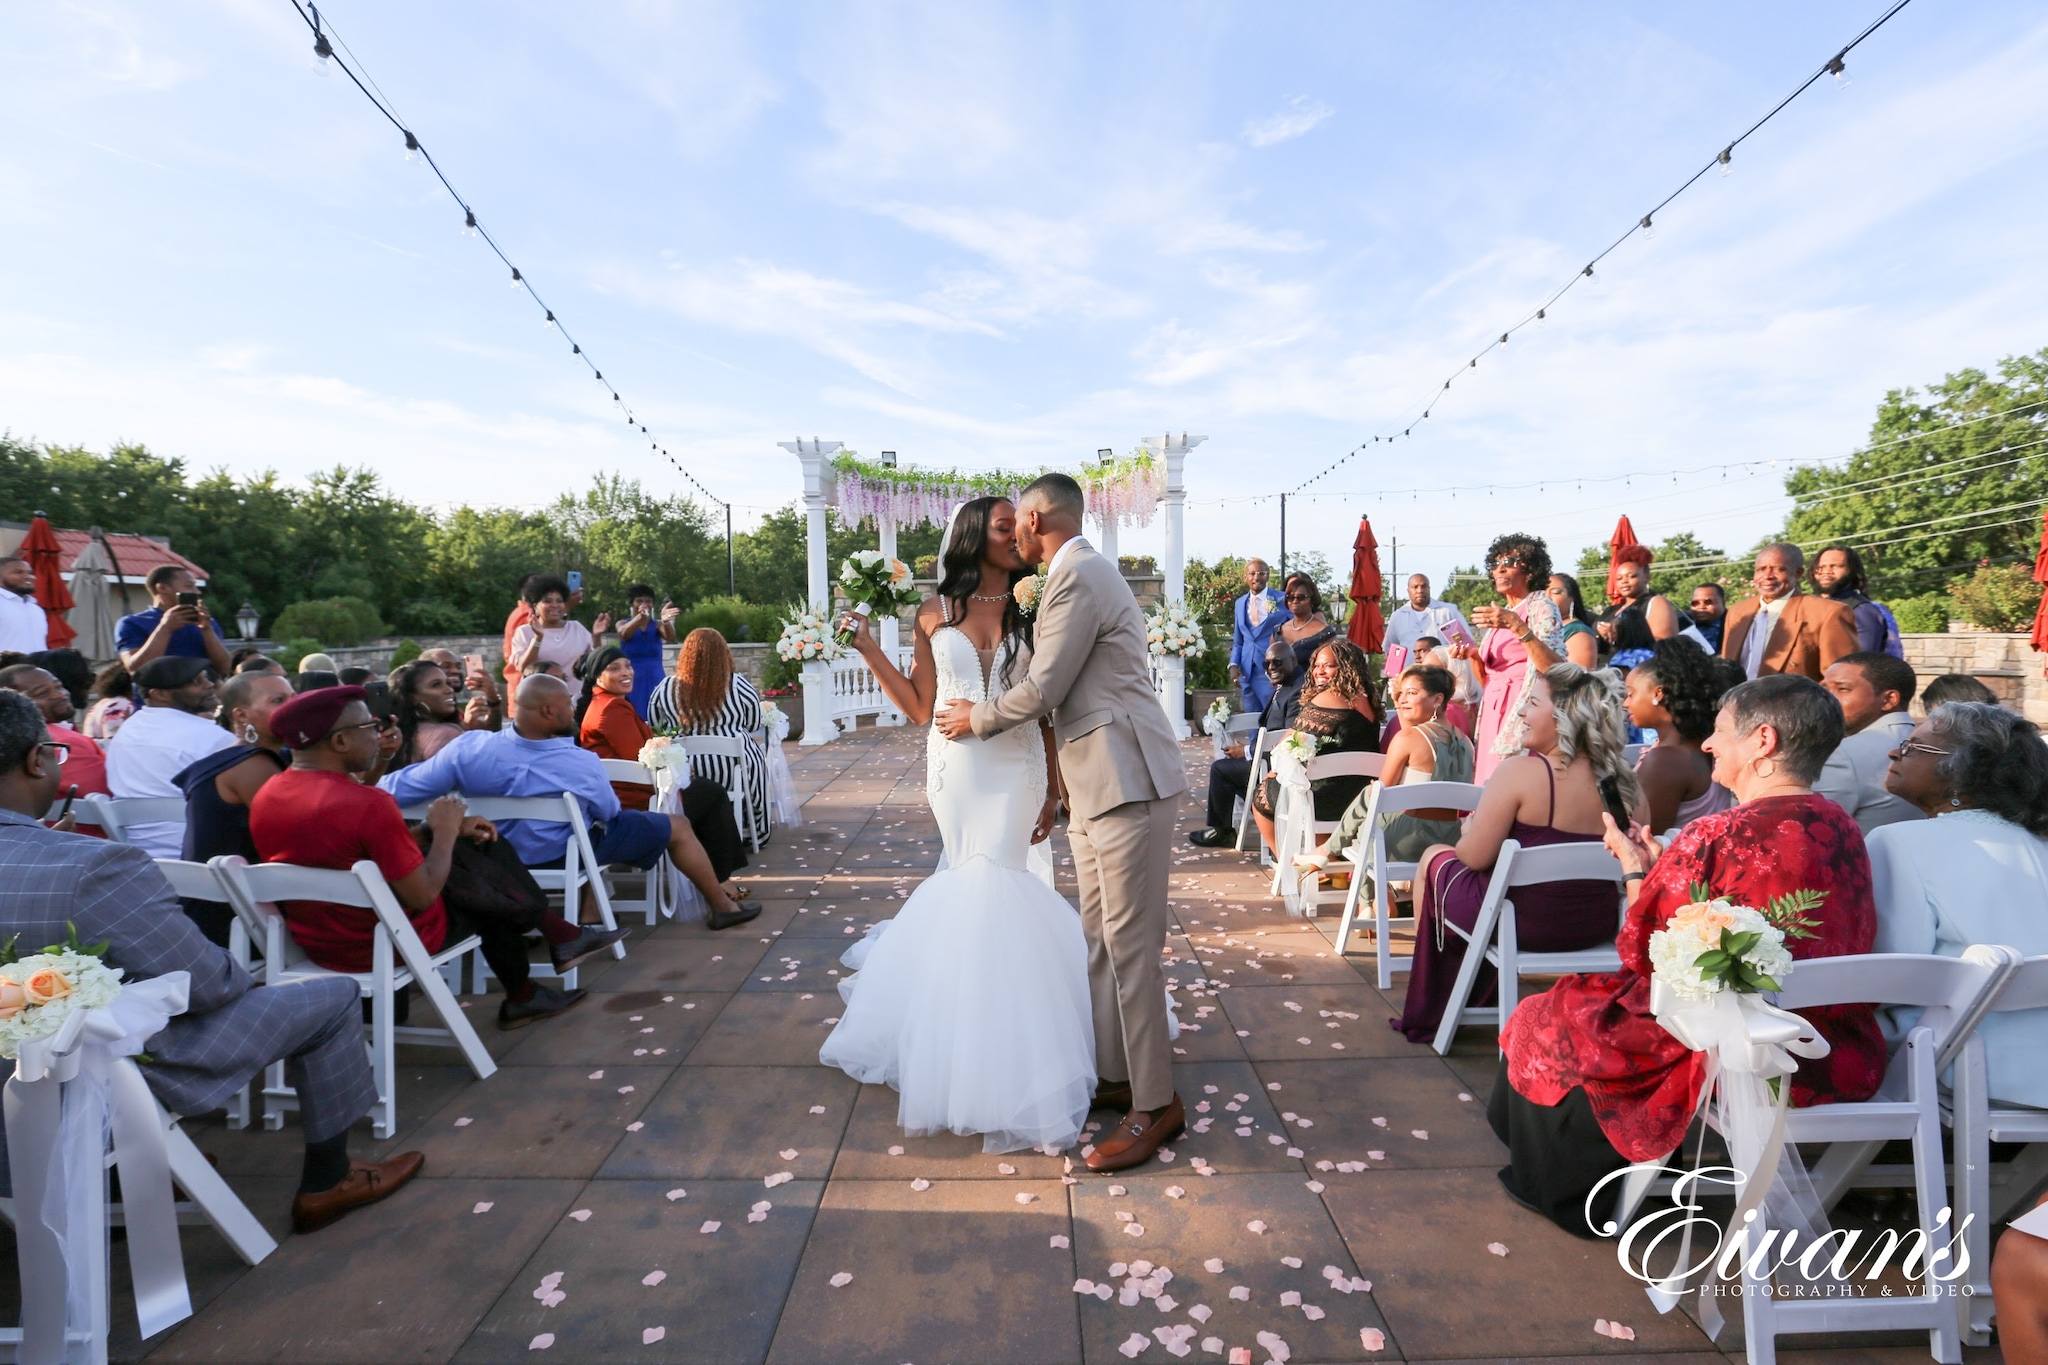 https://www.eivans.com/wp-content/uploads/2021/05/list-of-must-have-wedding-photos-002.jpg